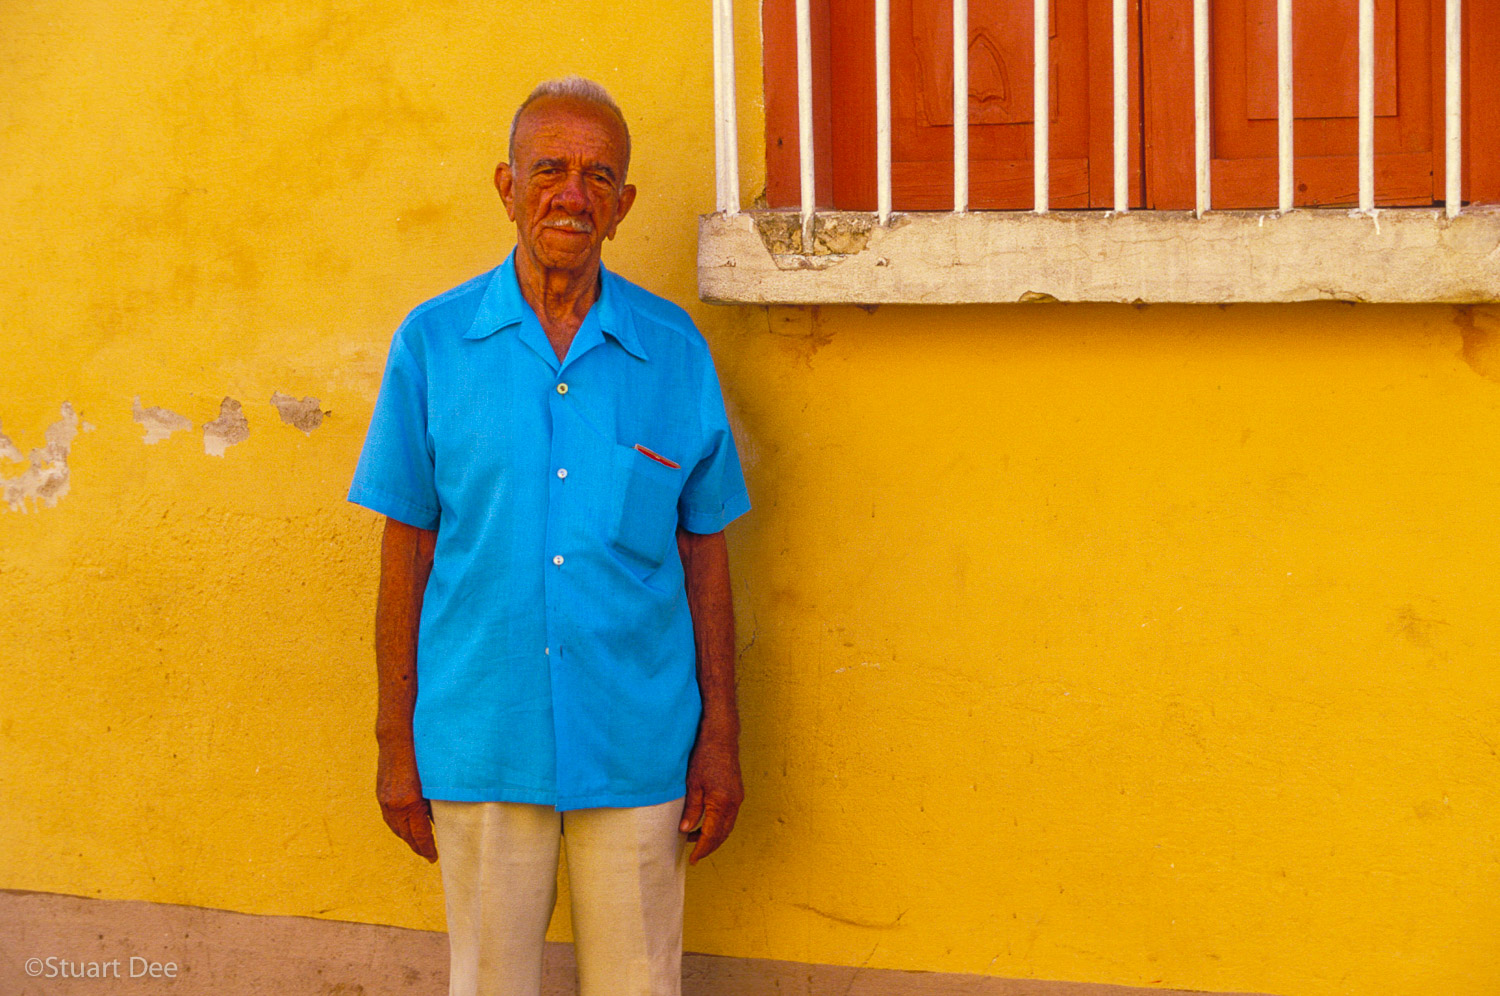  Old Man By Window, Trinidad, Cuba
R 